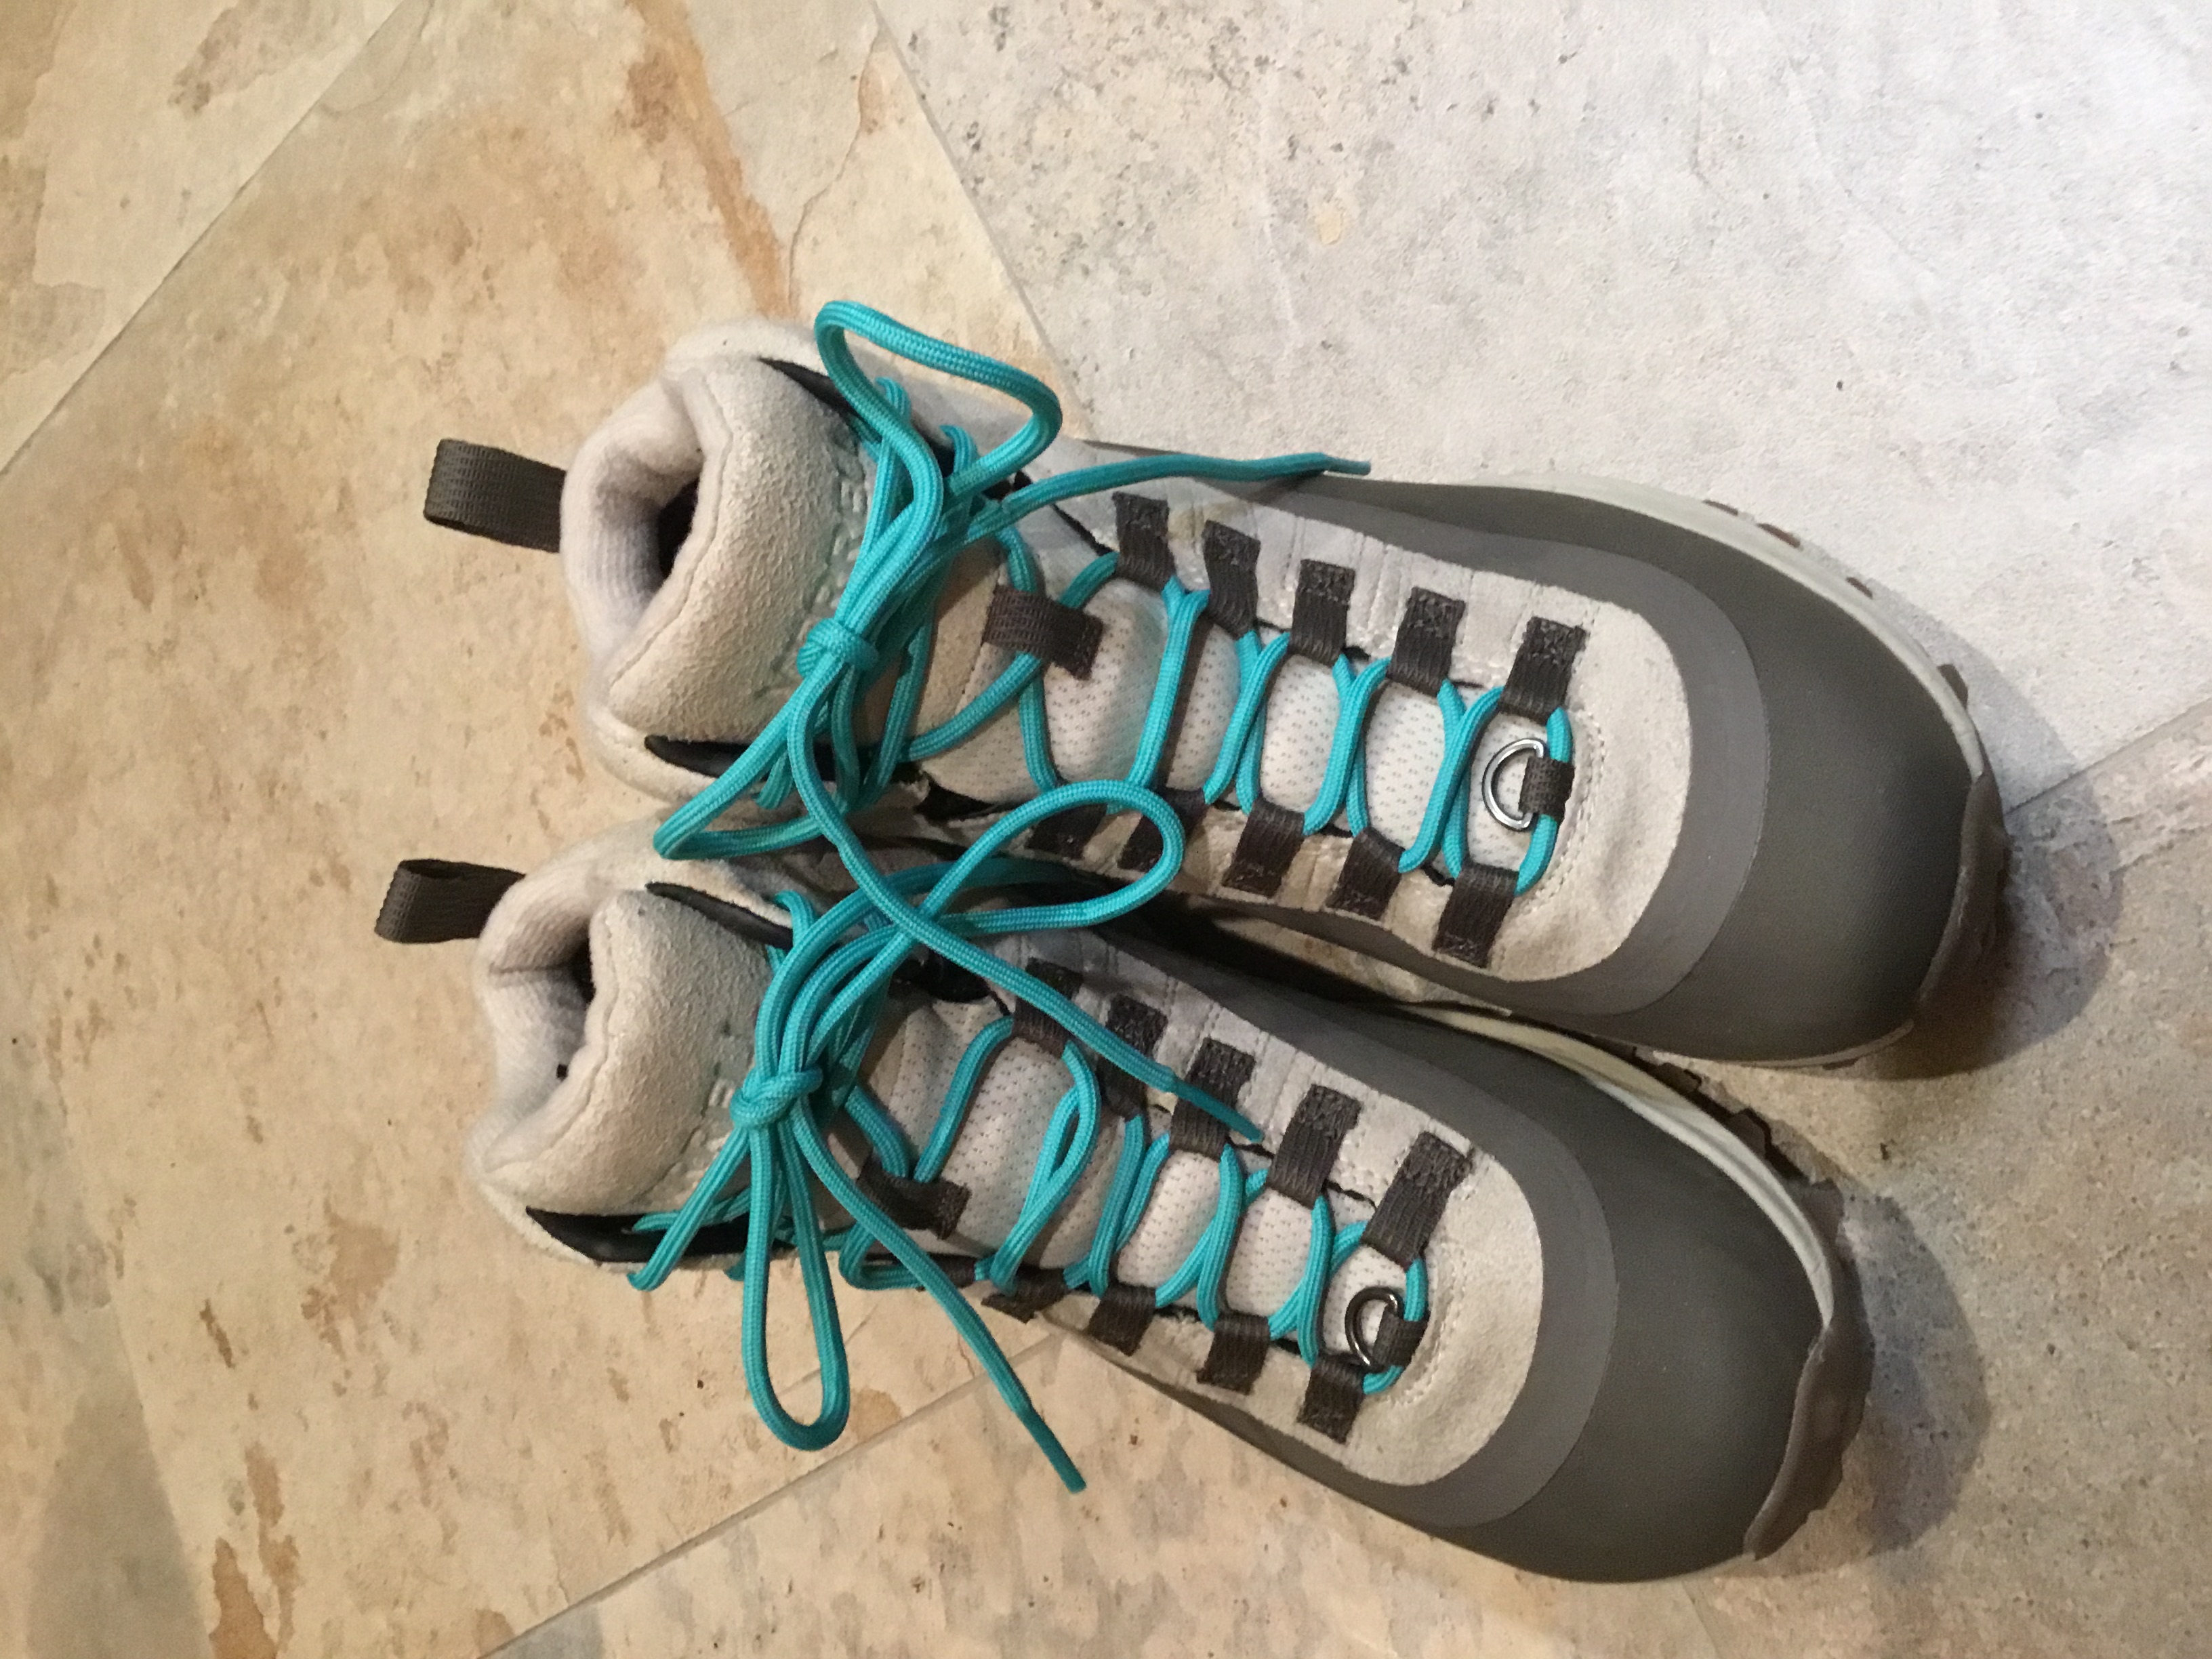 merrell moab shoe laces